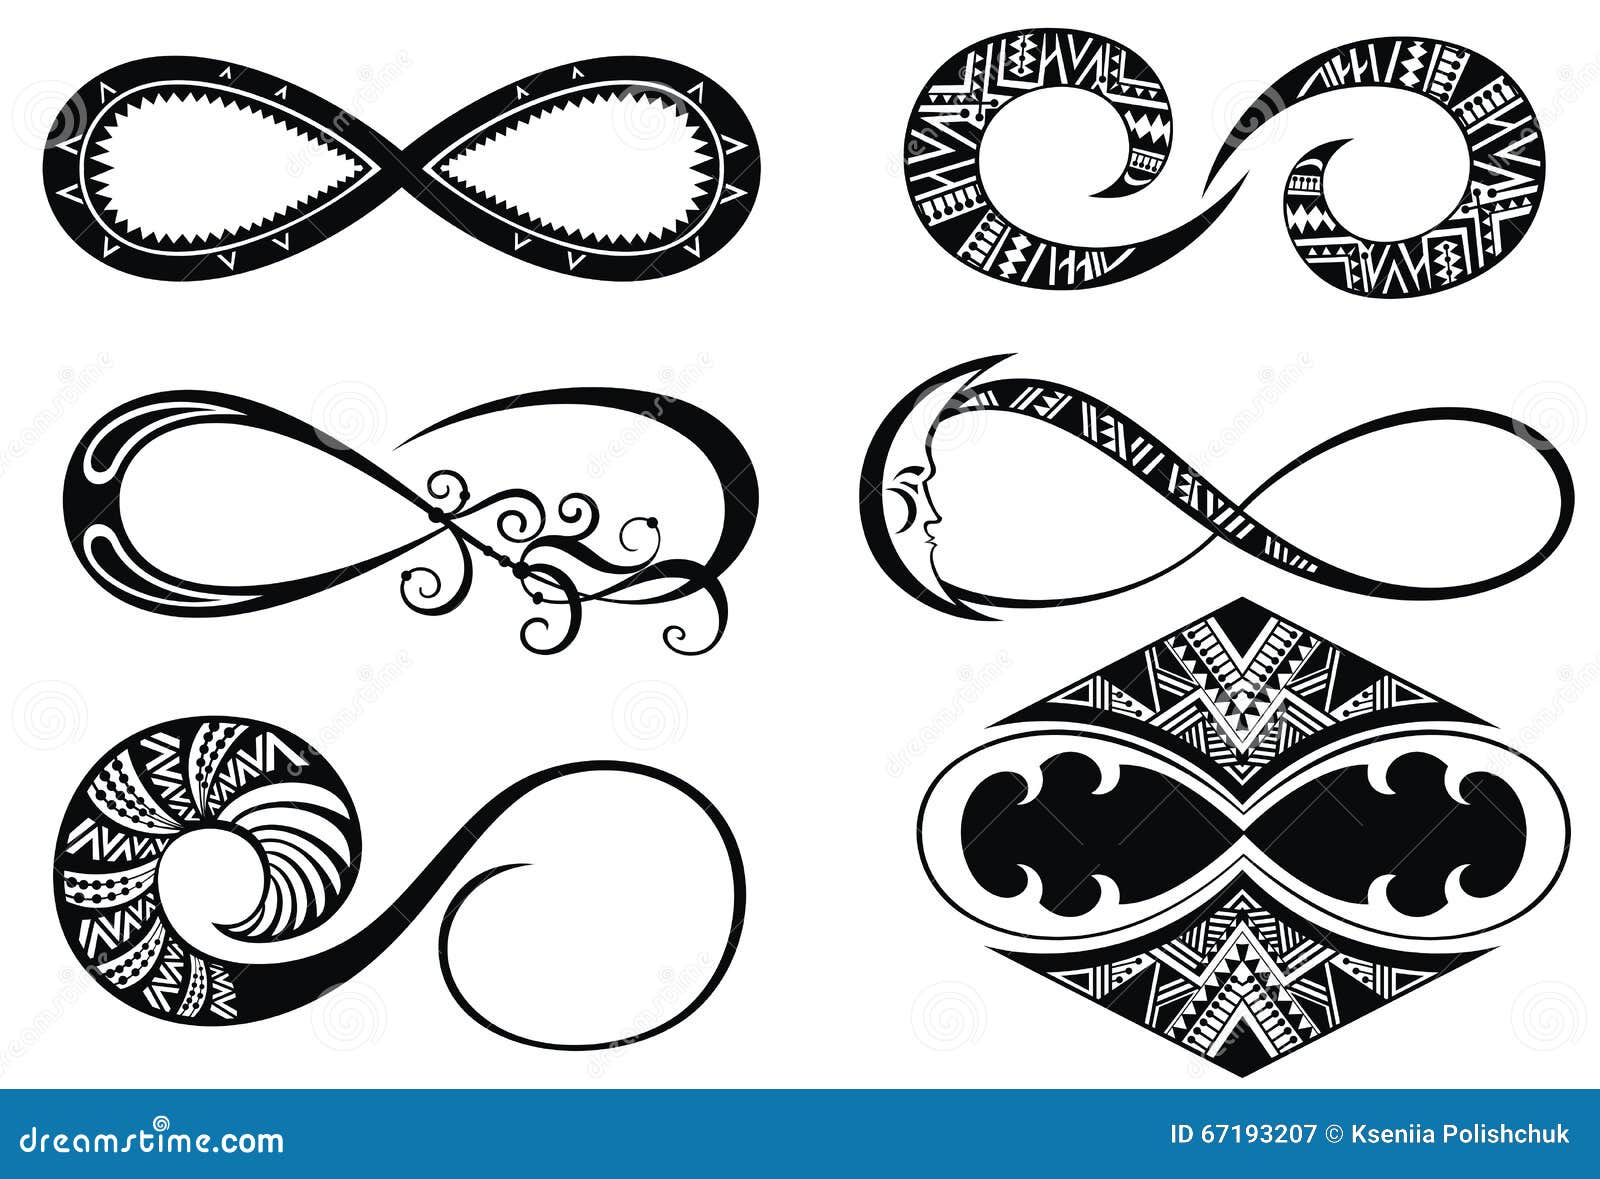 10 Best Infinity Symbol Tattoos: Ideas For Infinity Symbol Tattoos –  MrInkwells